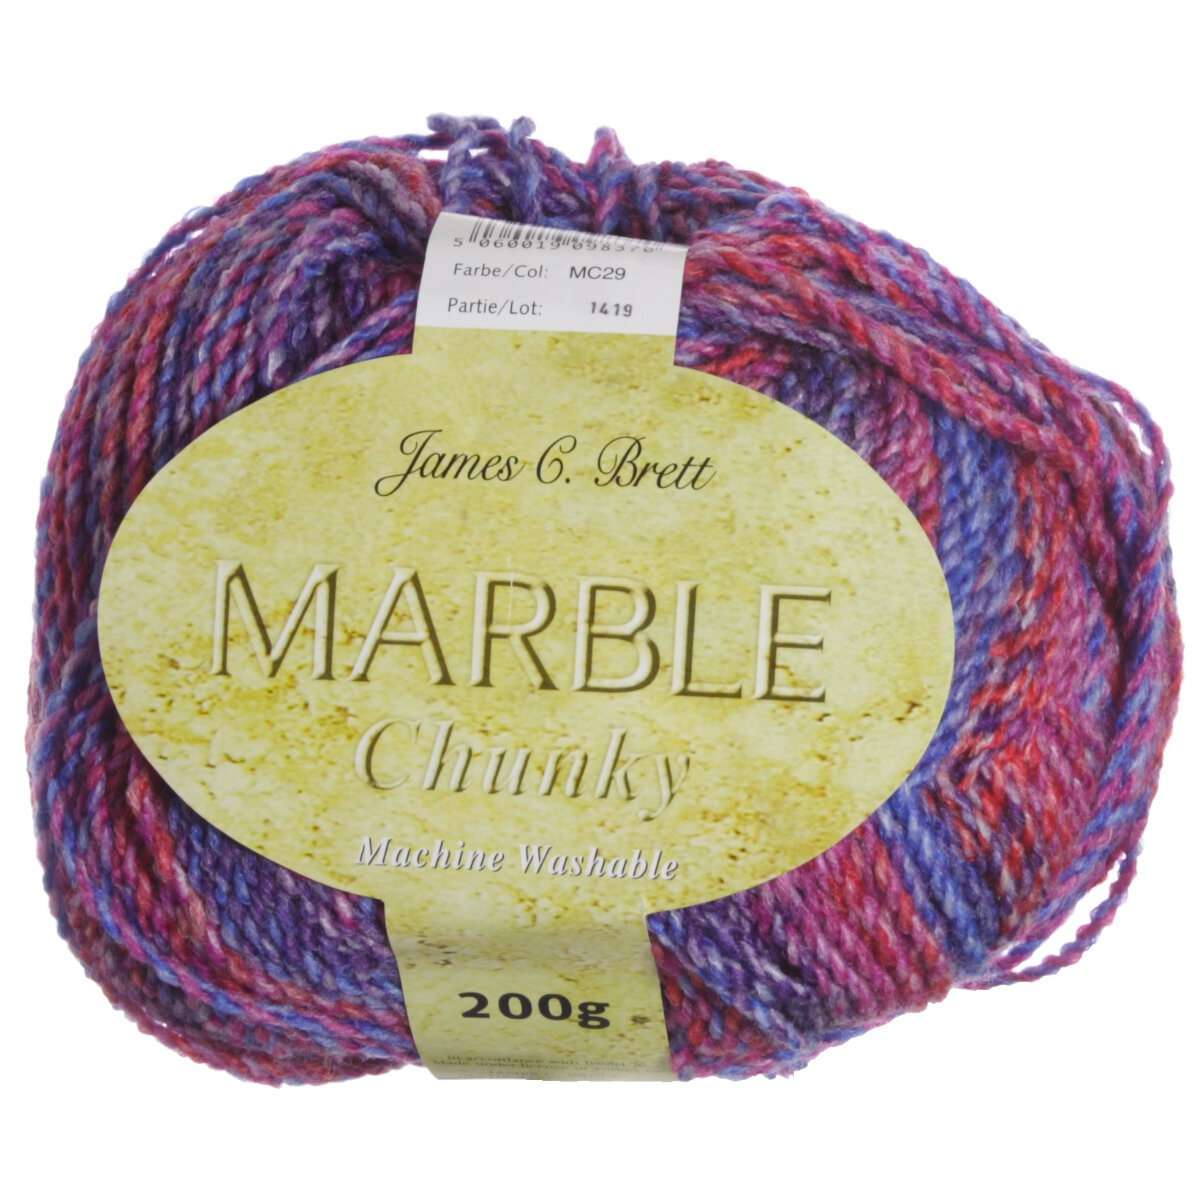 James C. Brett Marble Chunky Yarn 29 Project Ideas at Jimmy Beans Wool